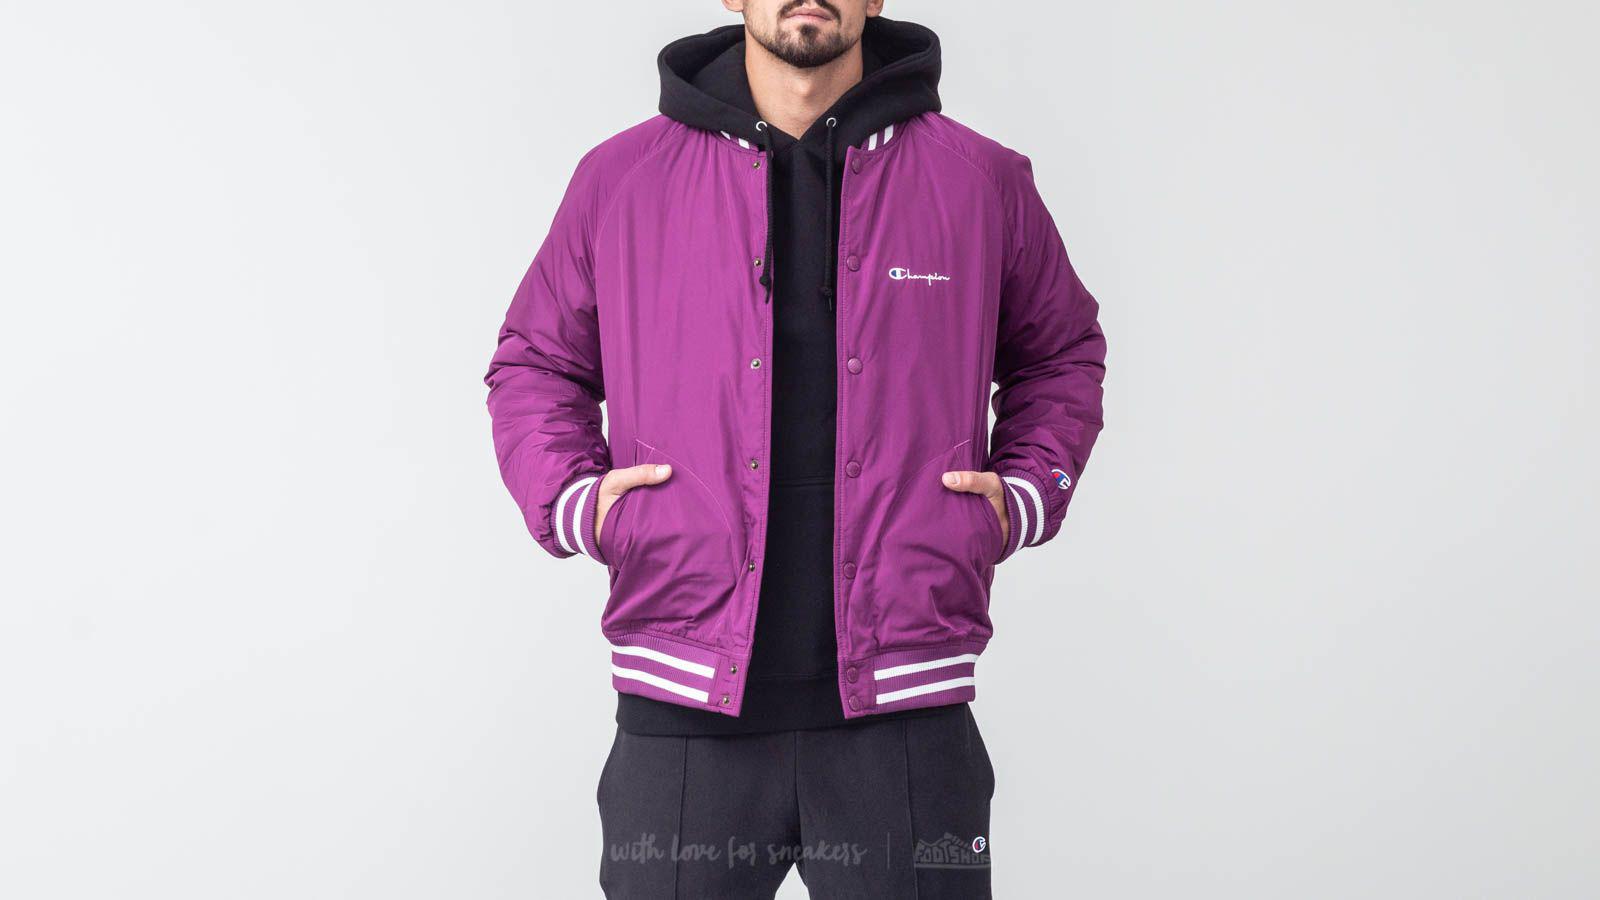 champion jacket purple